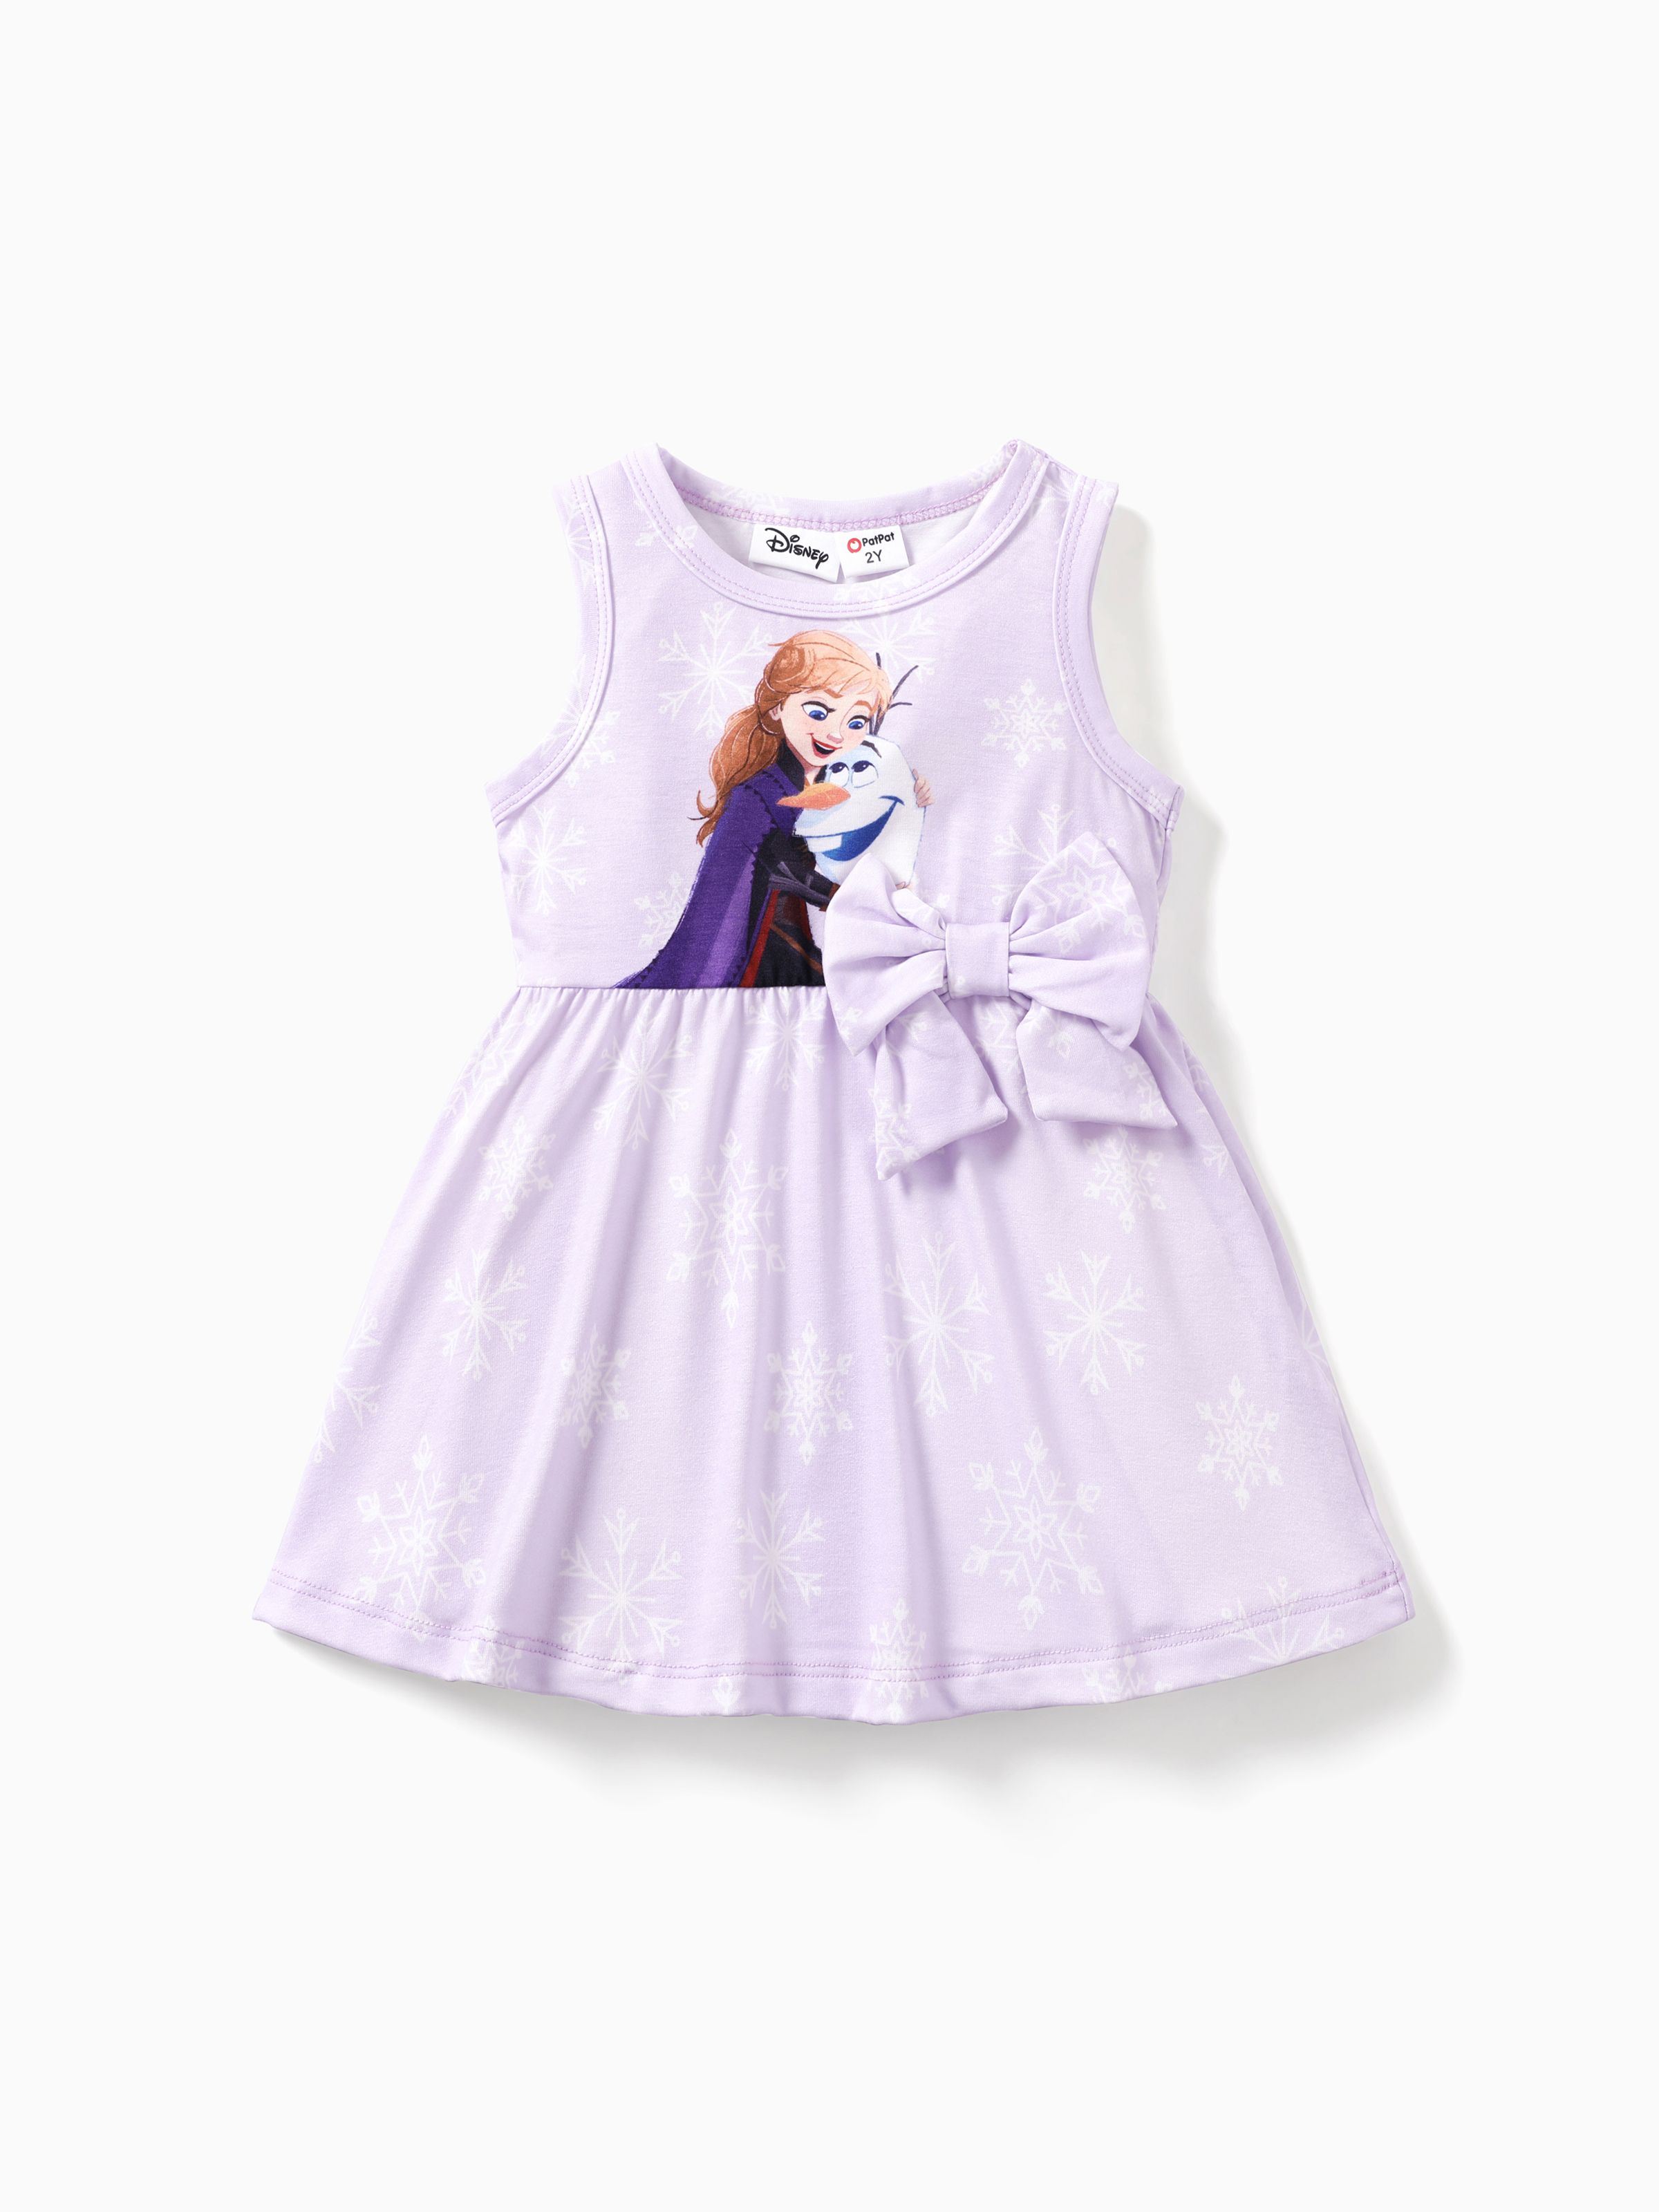 

Disney Frozen Anna 1pc Toddler Girl Character Print Bowknot Tank Top